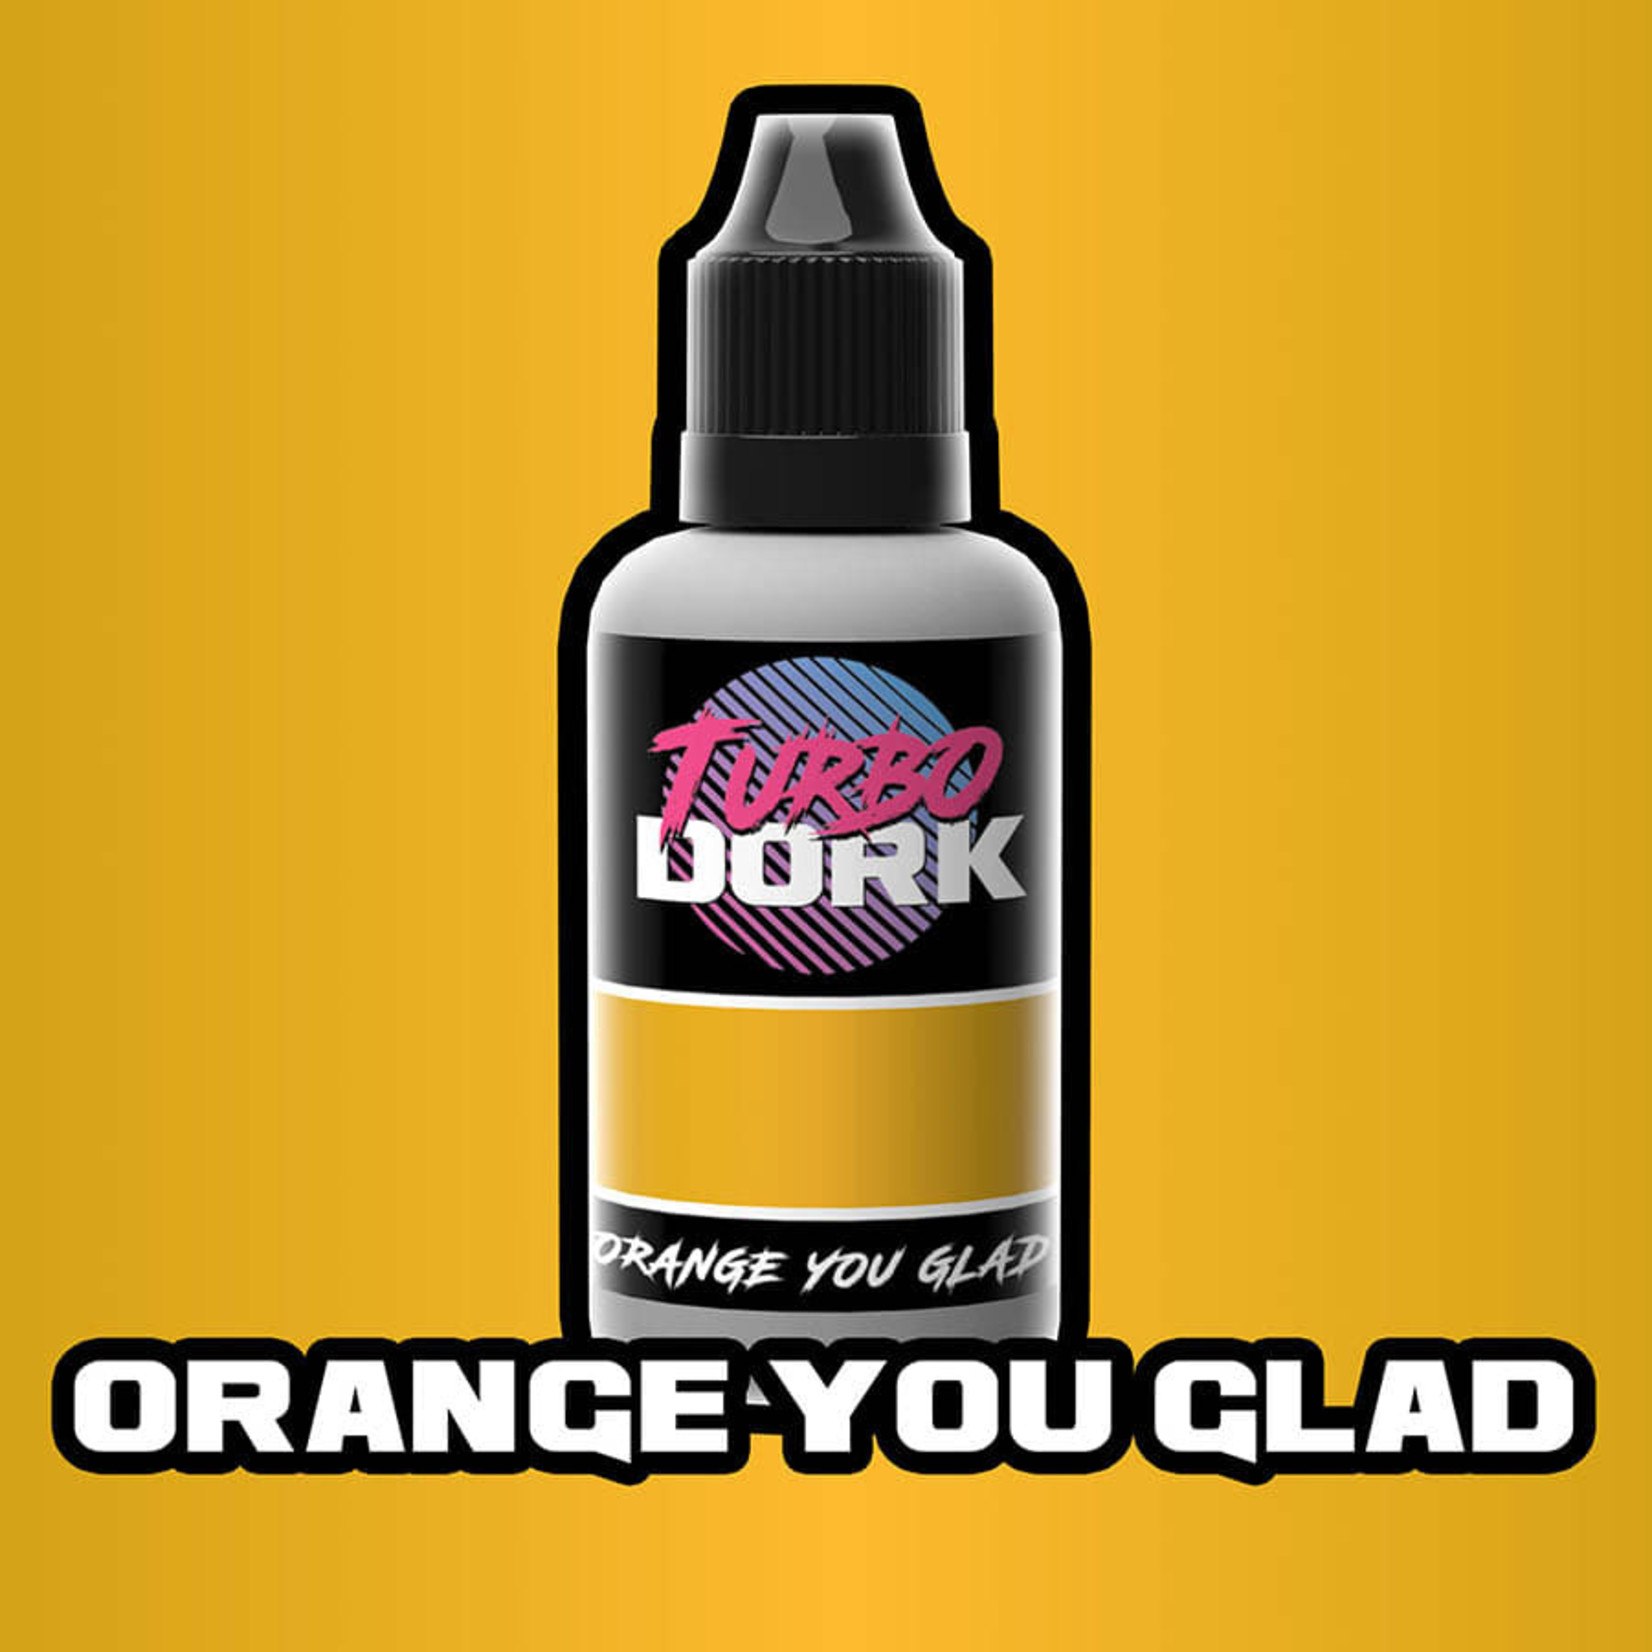 Turbo Dork Orange You Glad Metallic Acrylic Paint 20ml Bottle